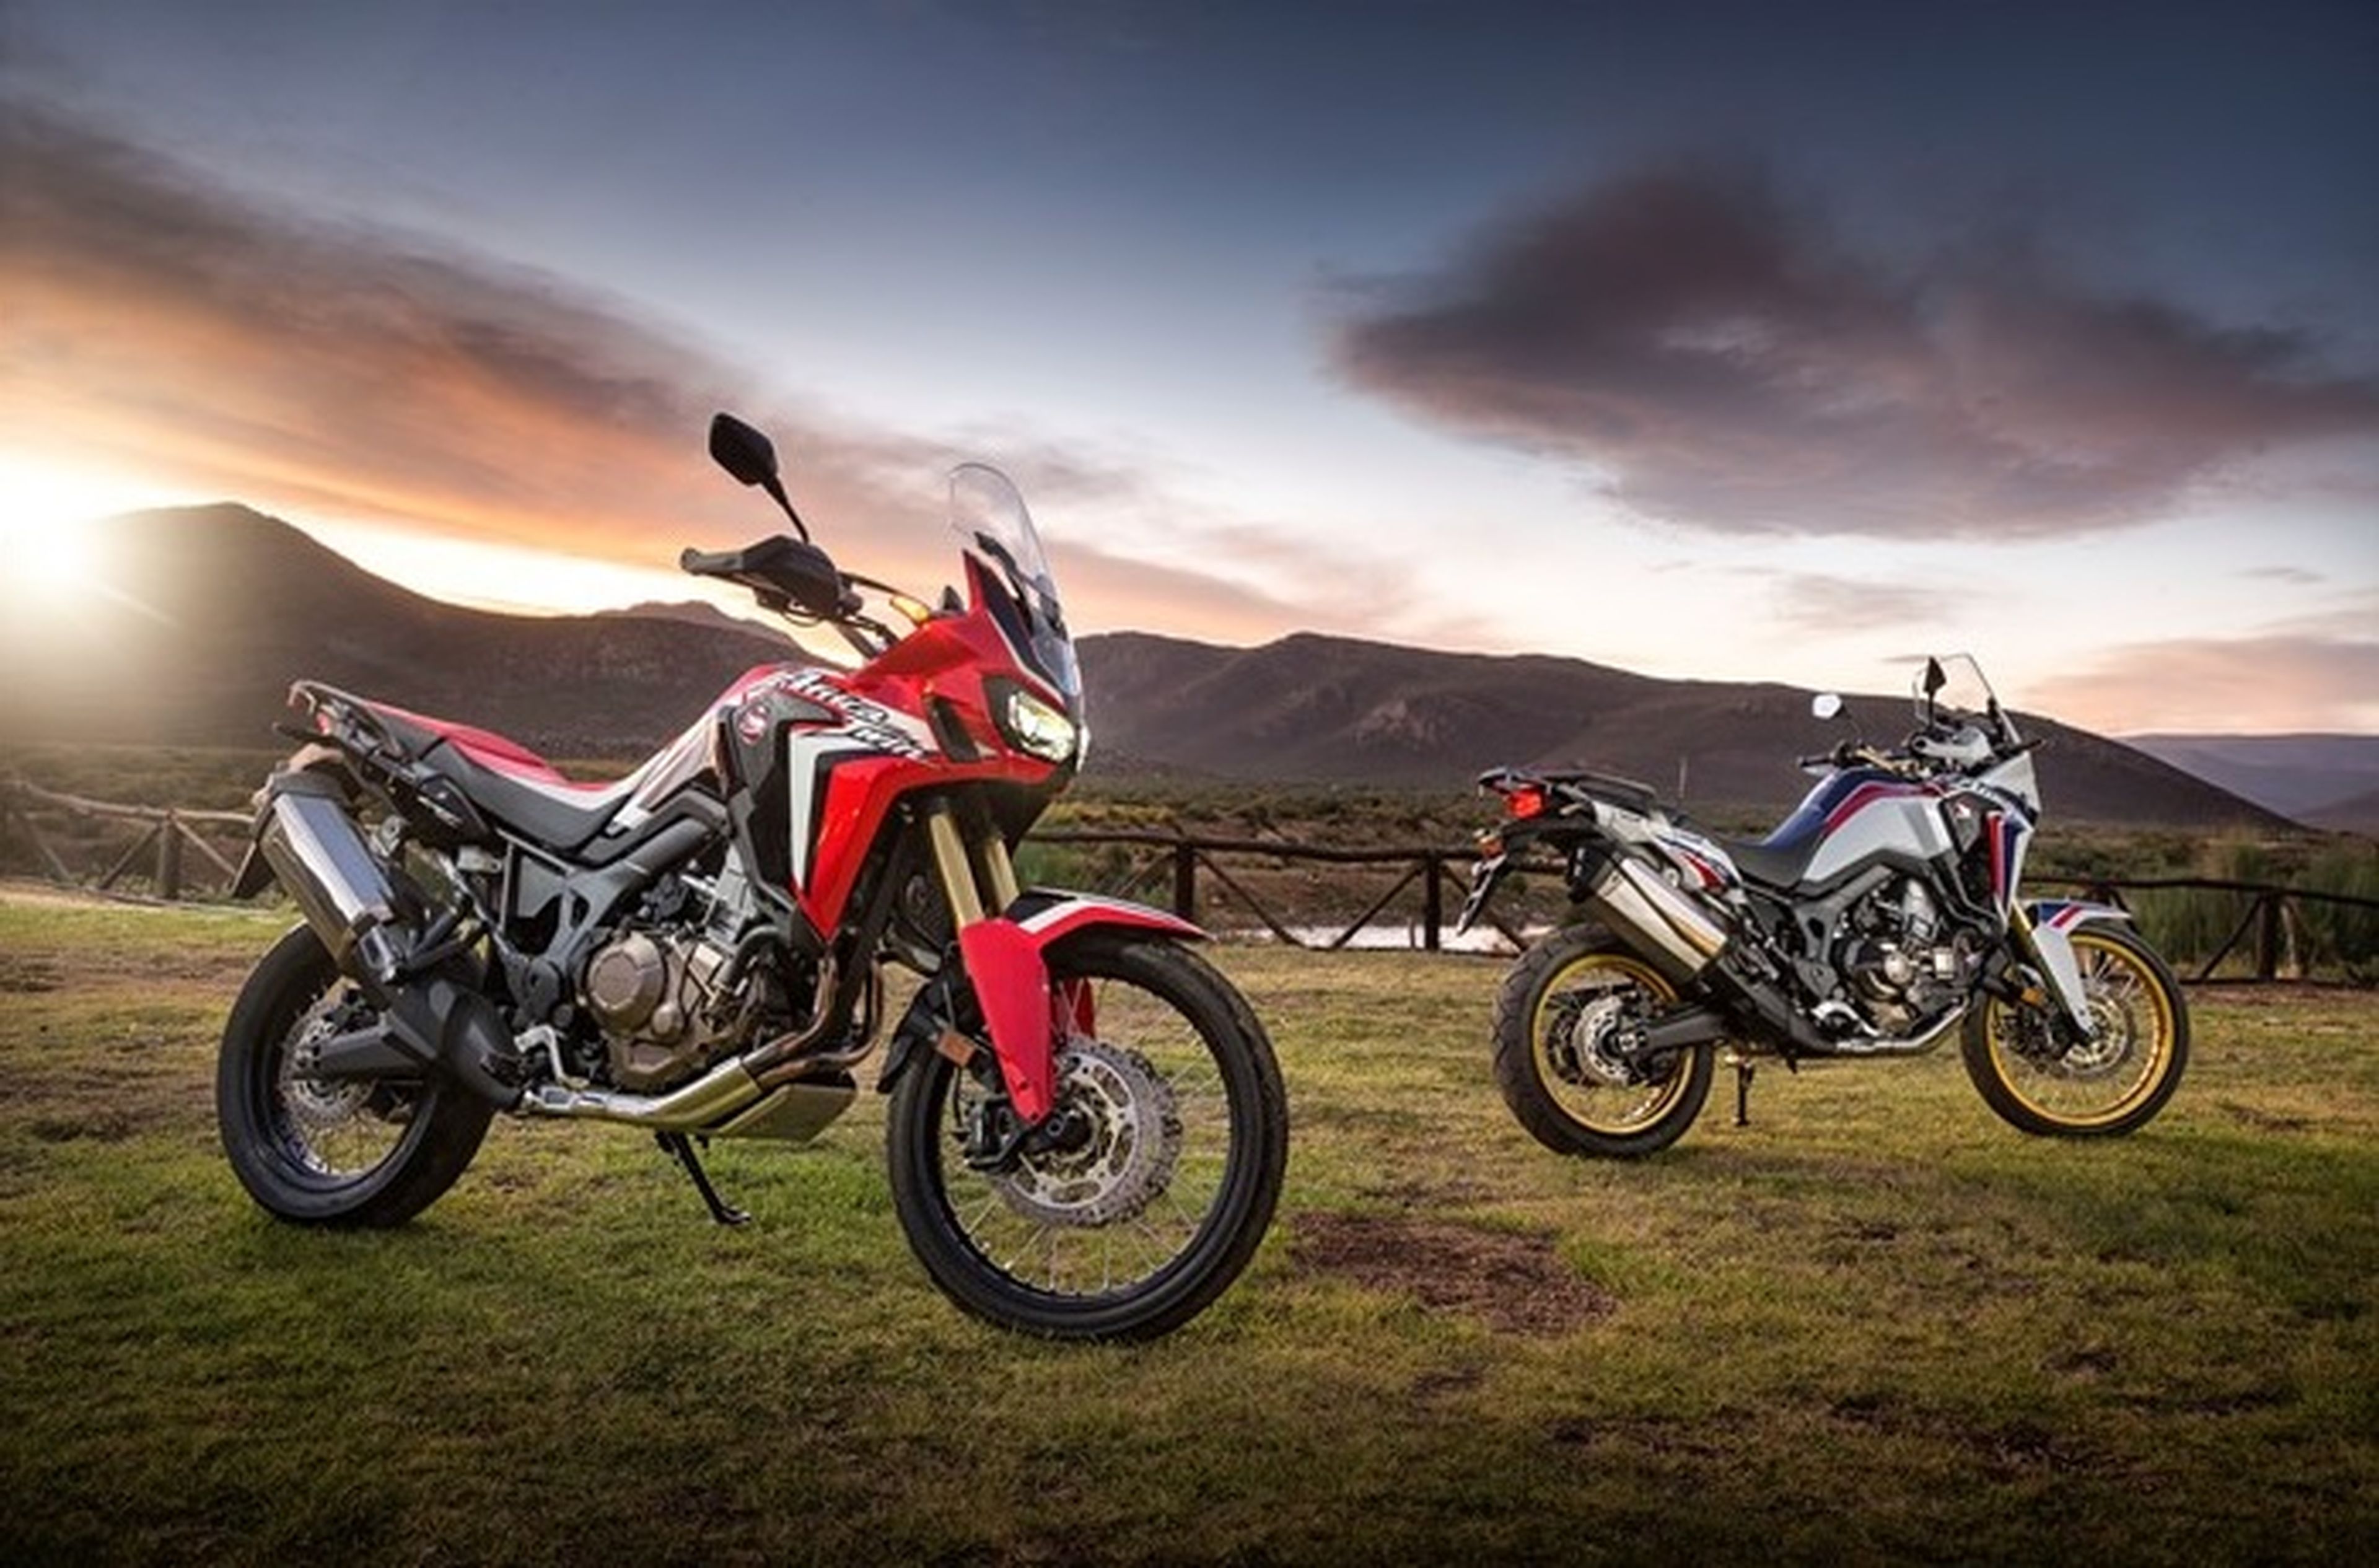 Honda Africa Twin 2016, segunda moto más vendida en España